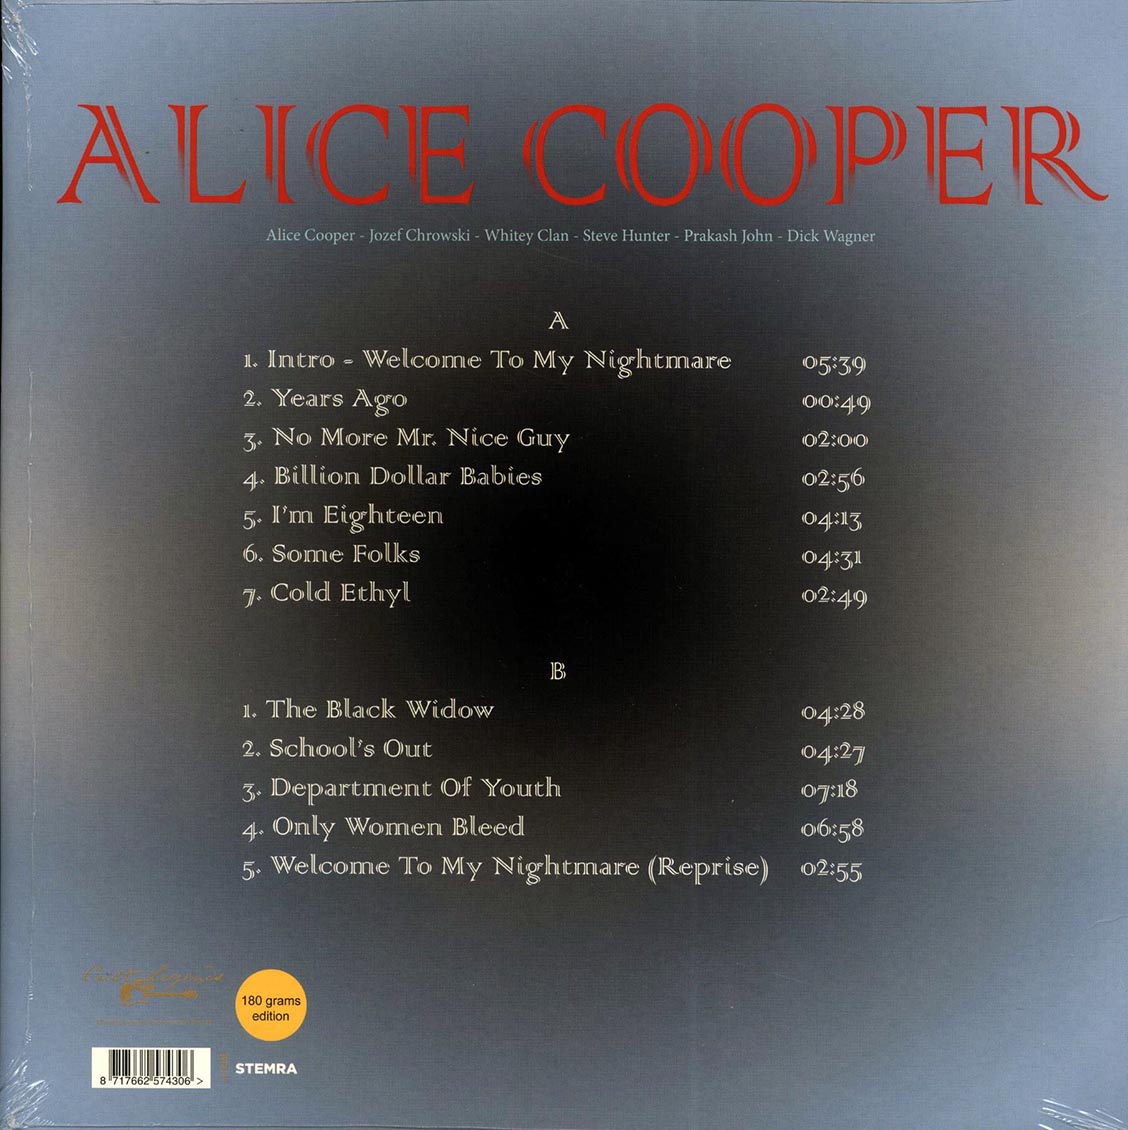 Alice Cooper - Alone In His Nightmare Live 1975: Great Western Forum, Inglewood, CA, June 18th - Vinyl LP, LP